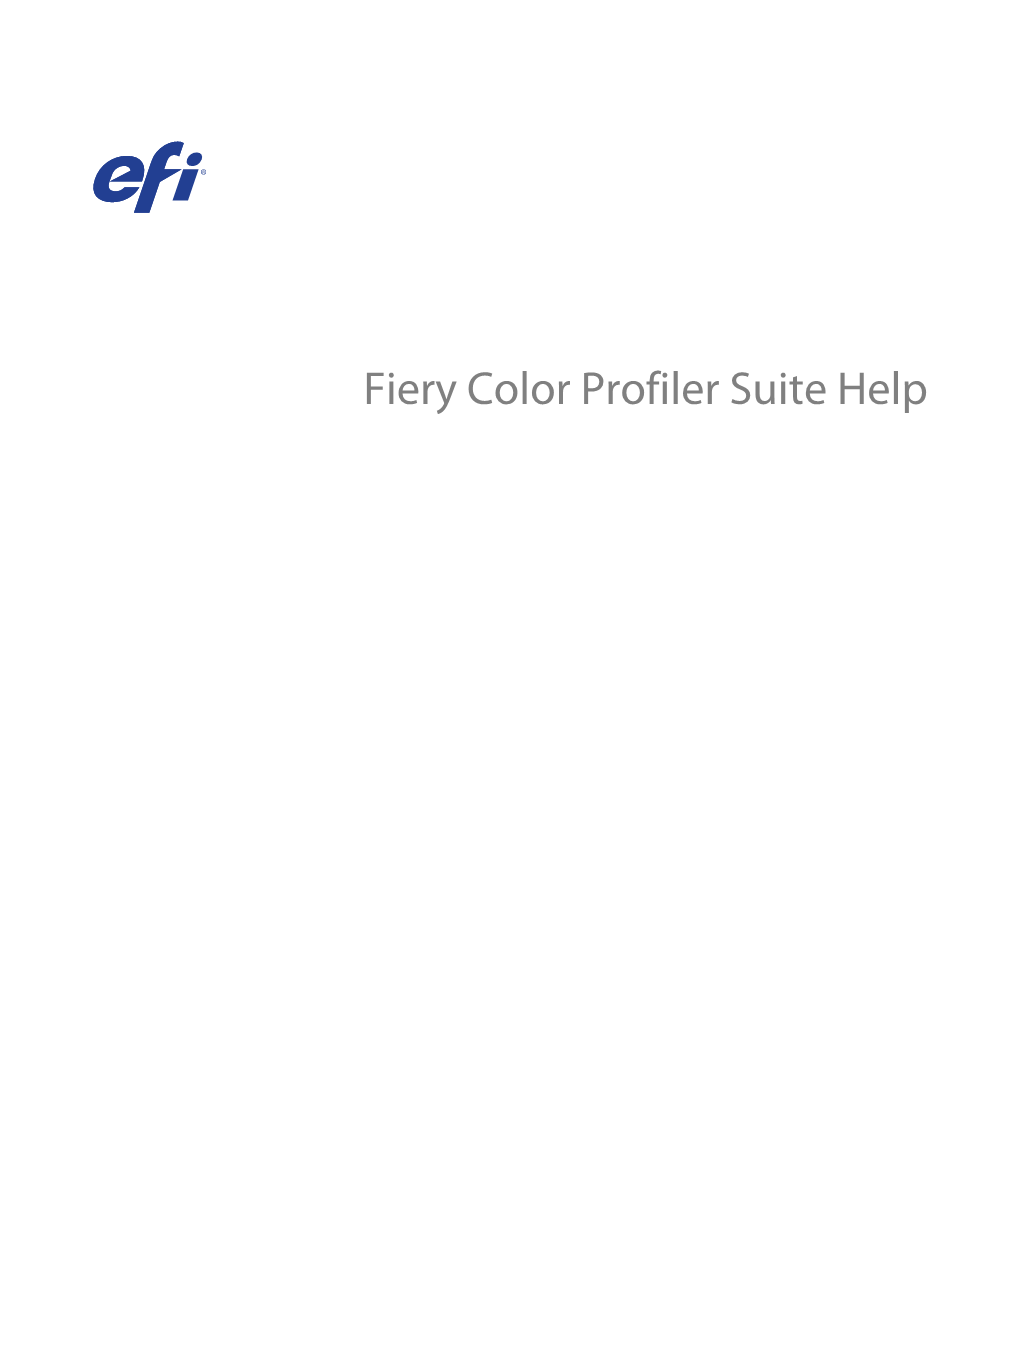 Fiery Color Profiler Suite Help © 2019 Electronics for Imaging, Inc